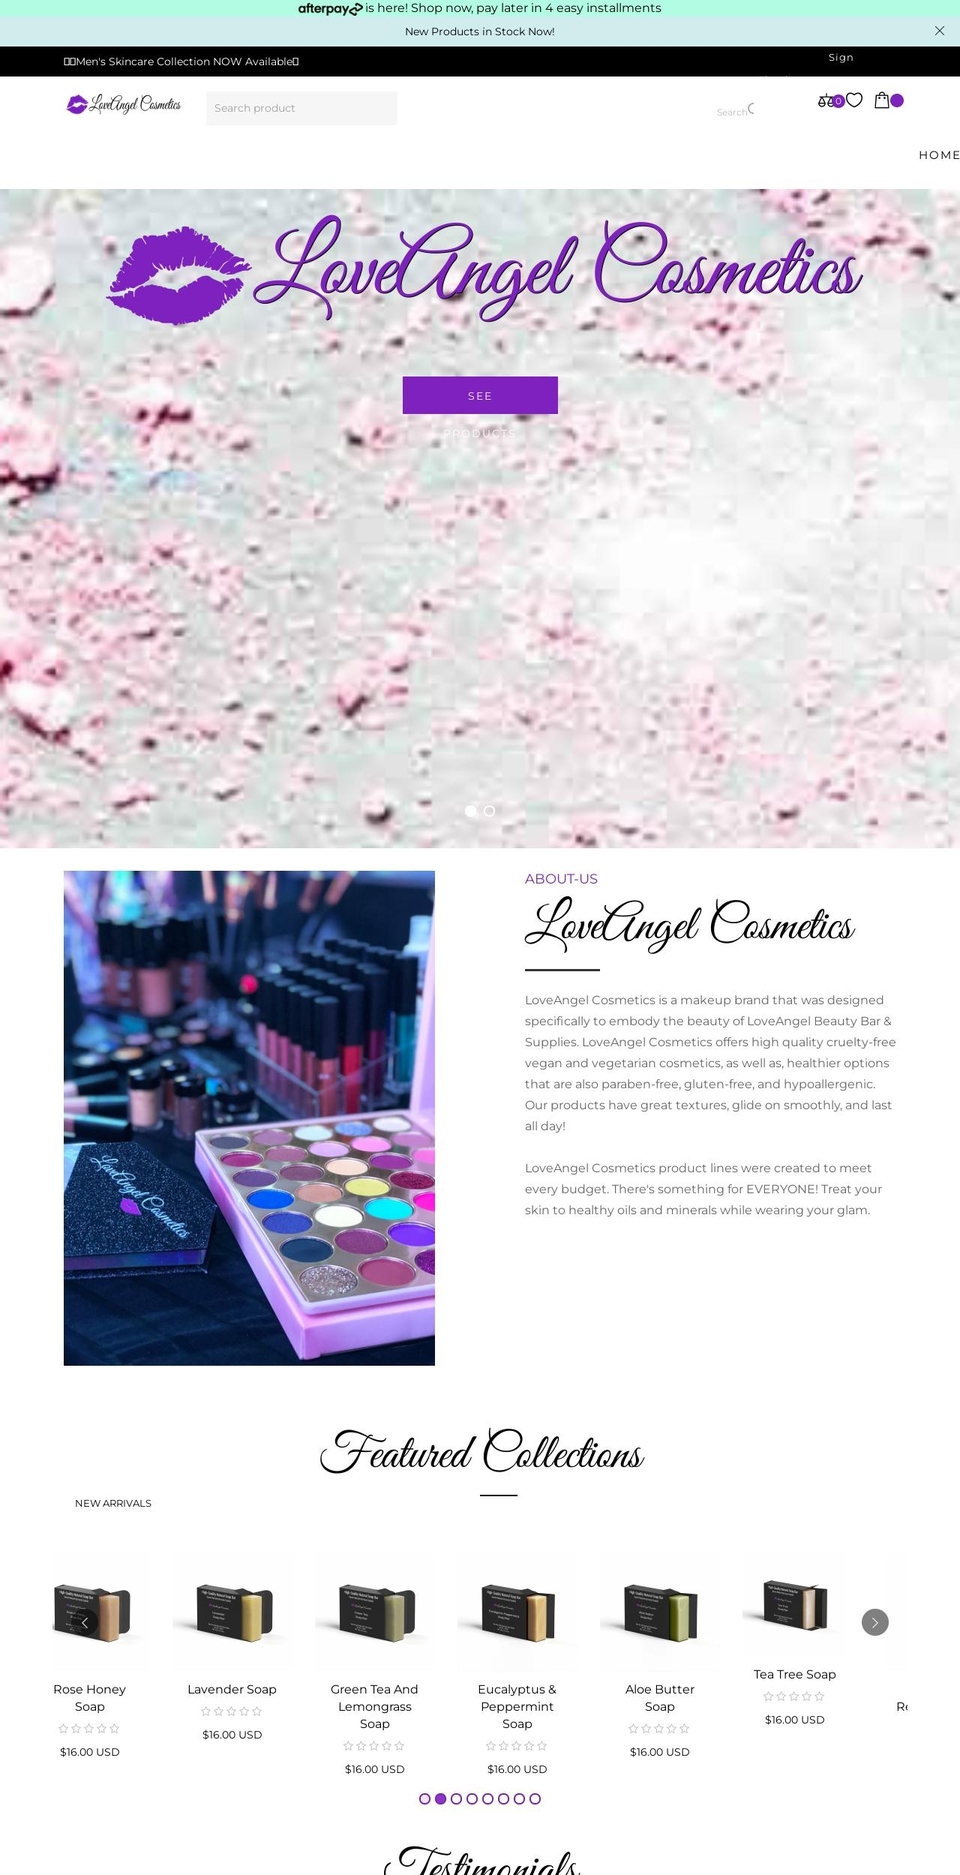 loveangelcosmetics.com shopify website screenshot